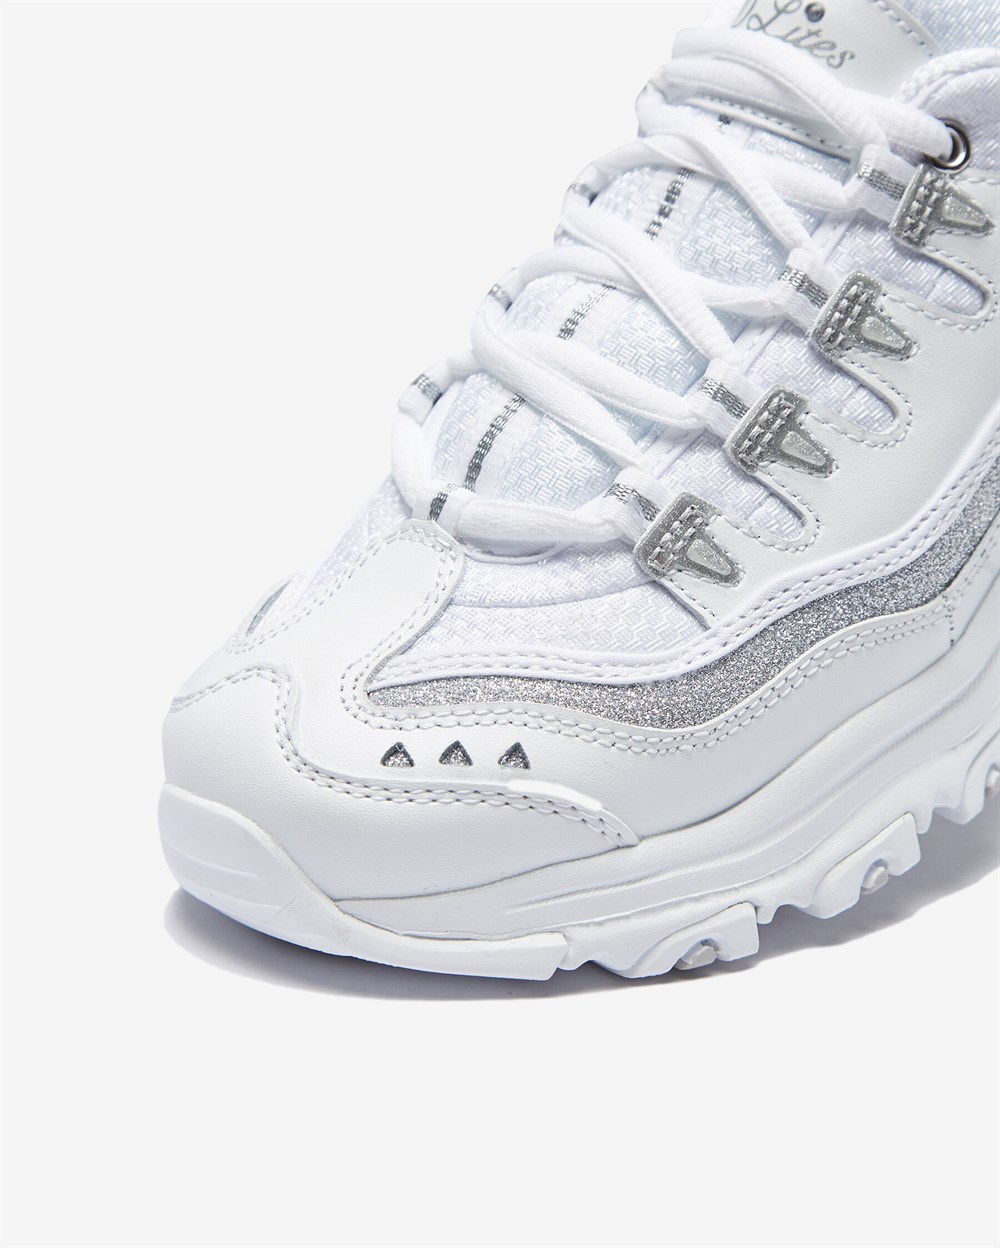 D'lites-Now & Kadın Beyaz Sneakers WSL | Skechers Modelleri